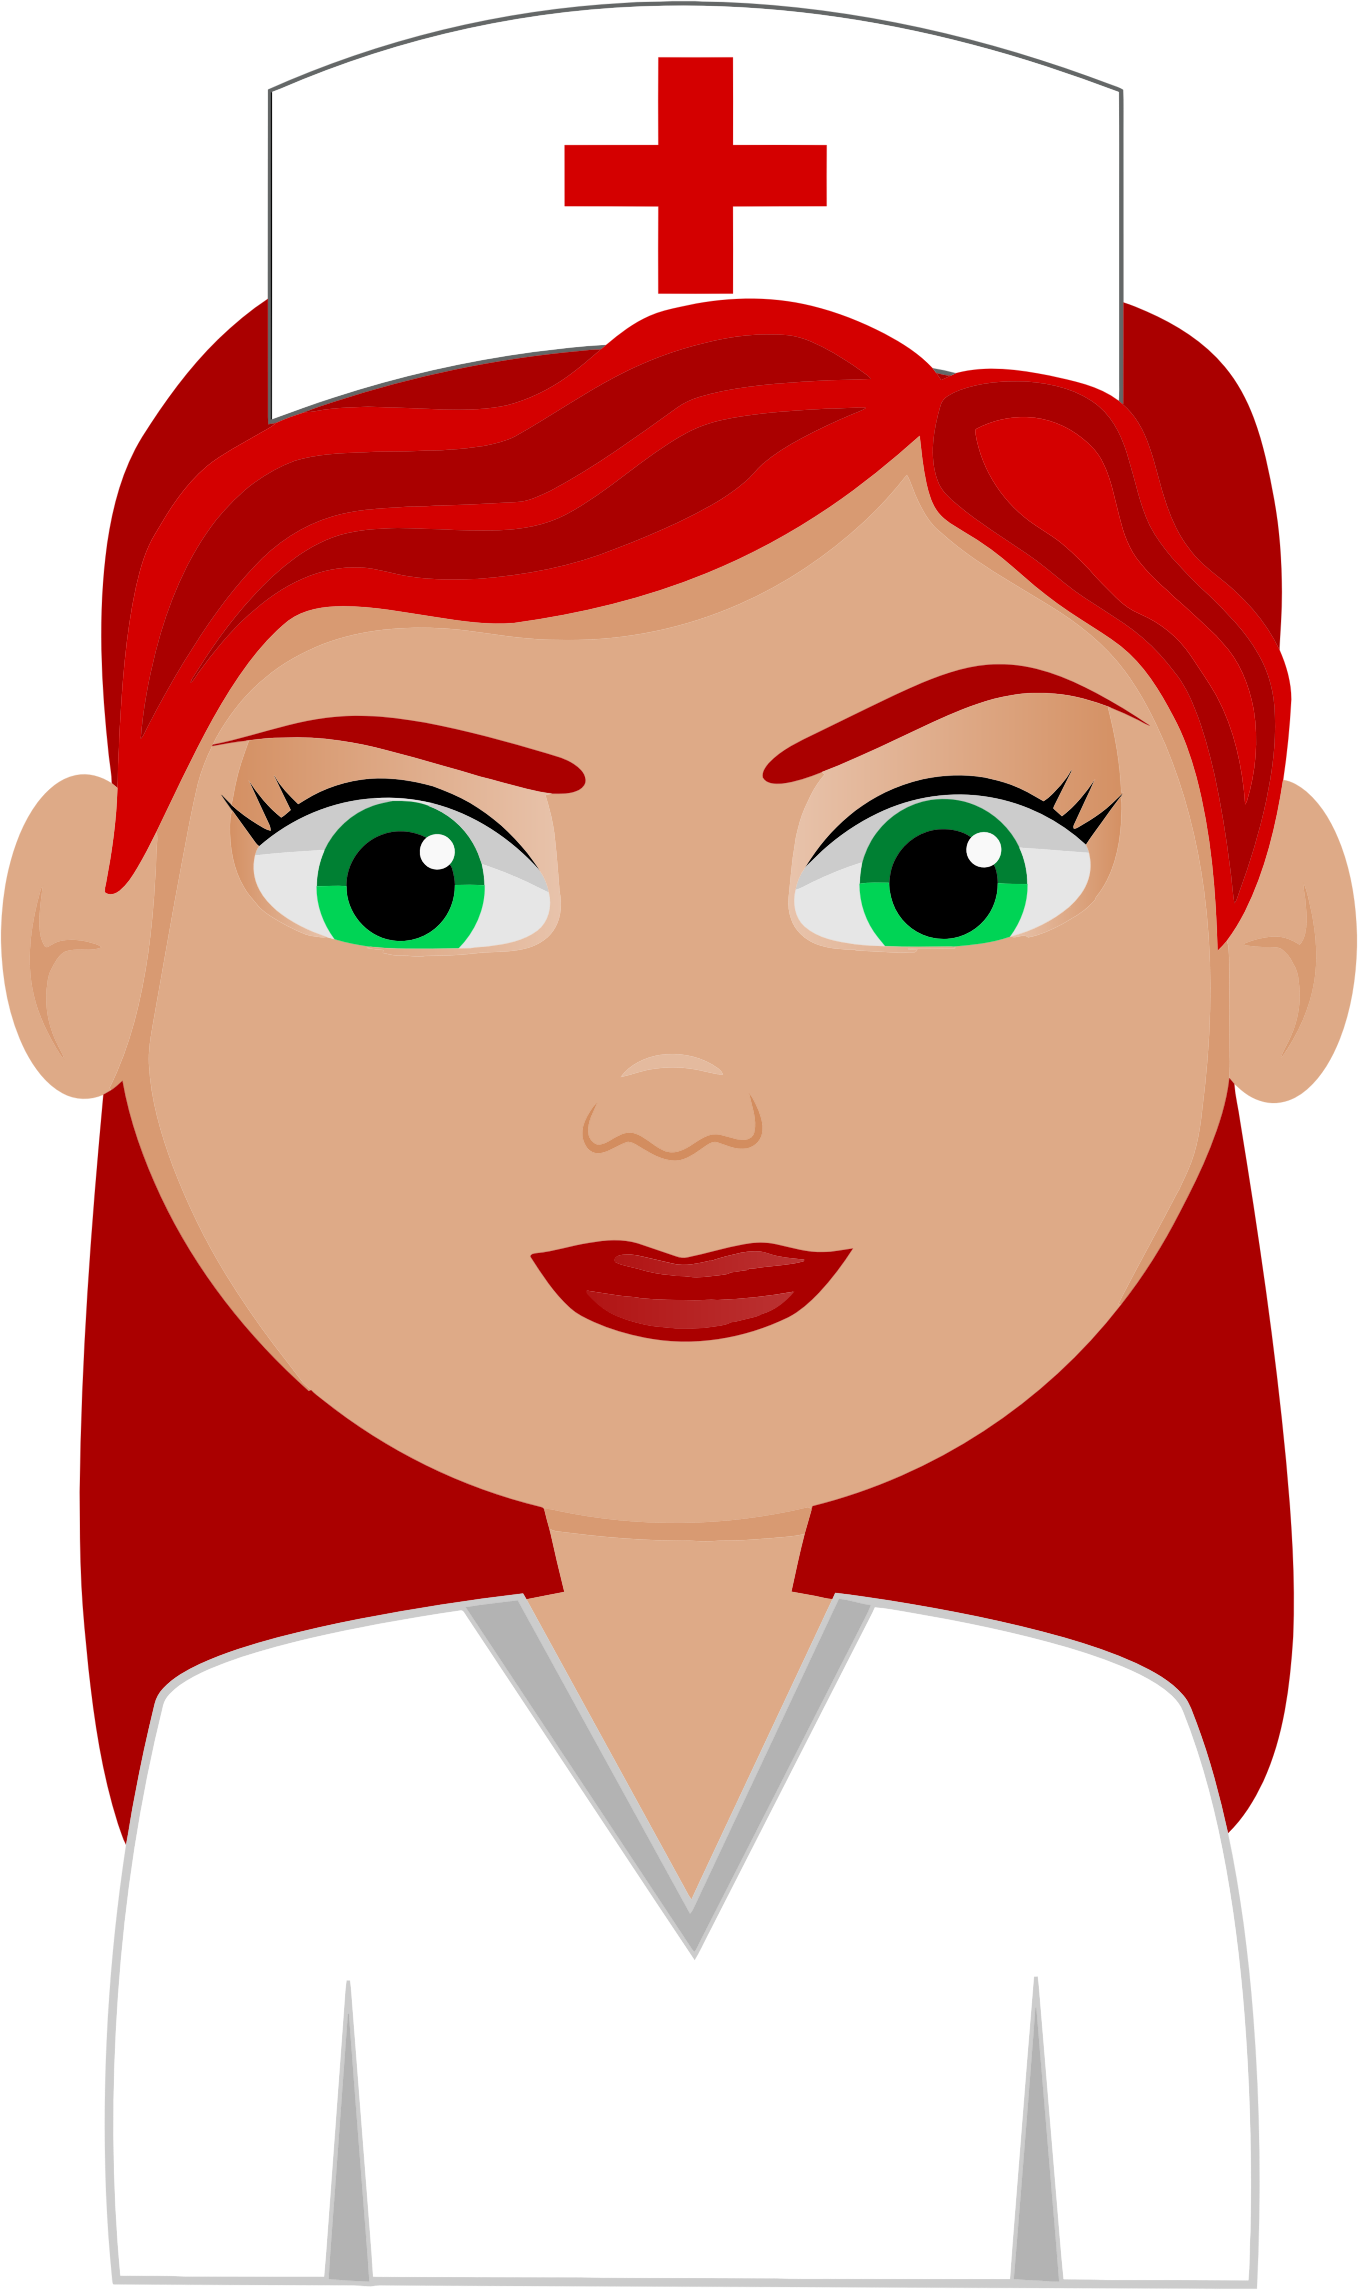 Nurse clipart licensed vocational nurse. Avatar icons png free